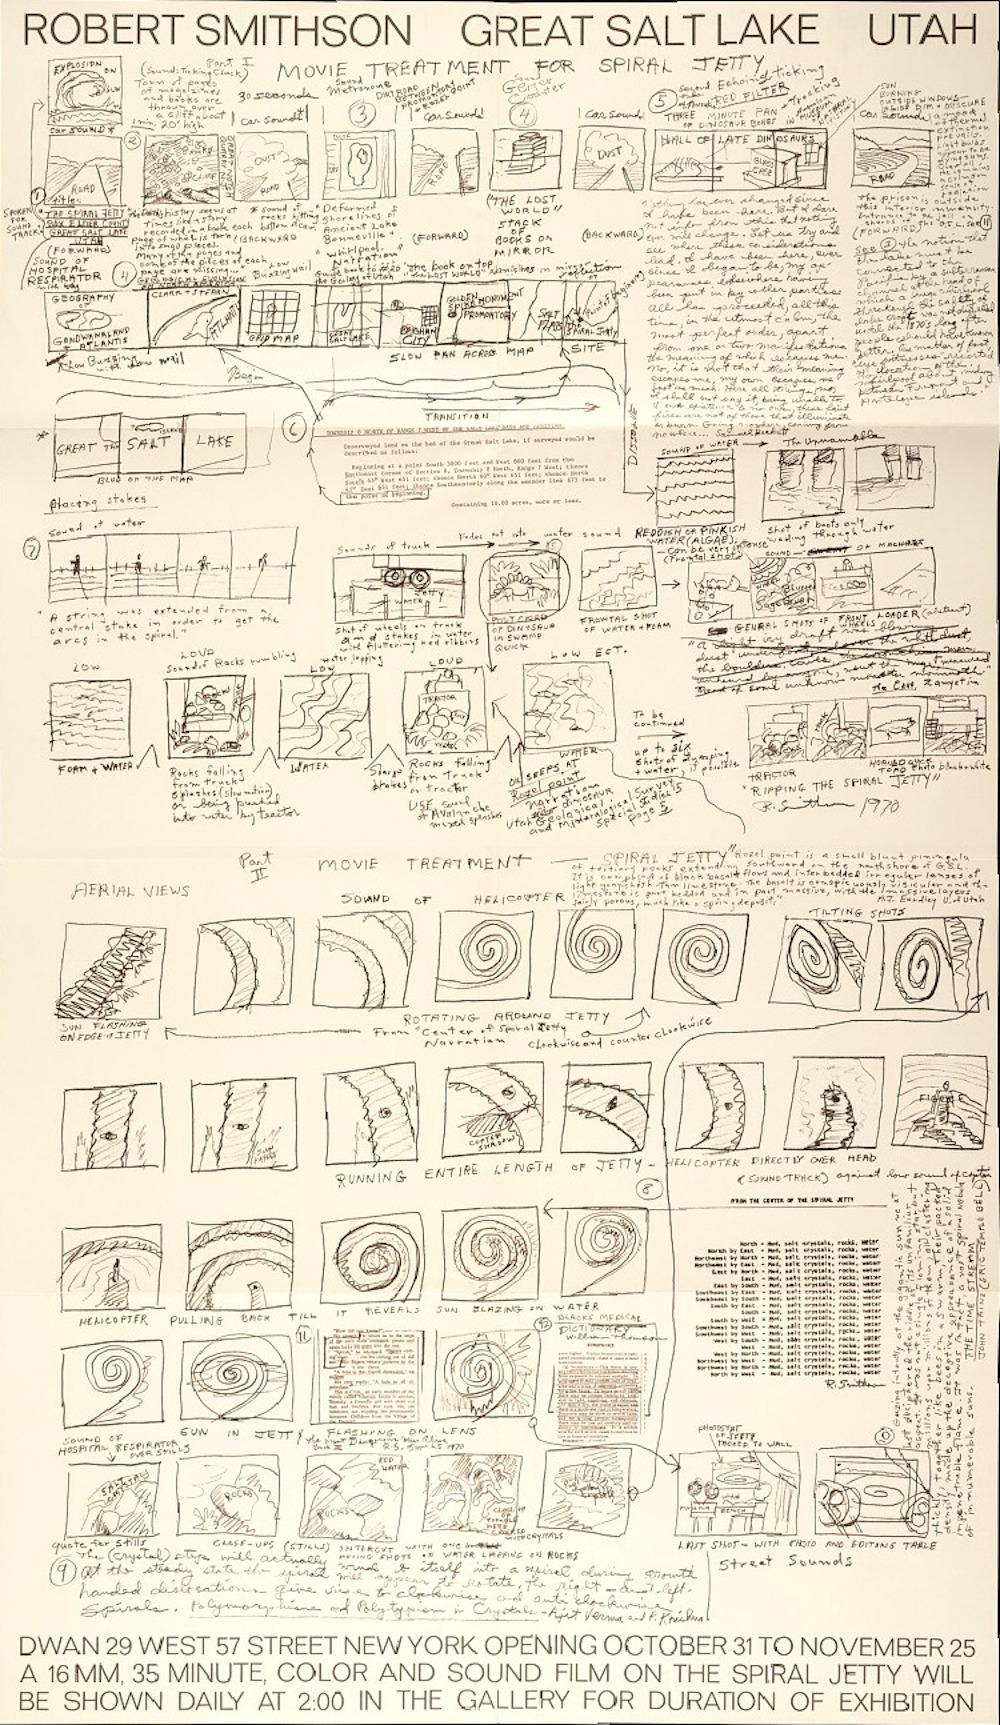 Affiche de la galerie Dwan pour Spiral Jetty - Print de Robert Smithson